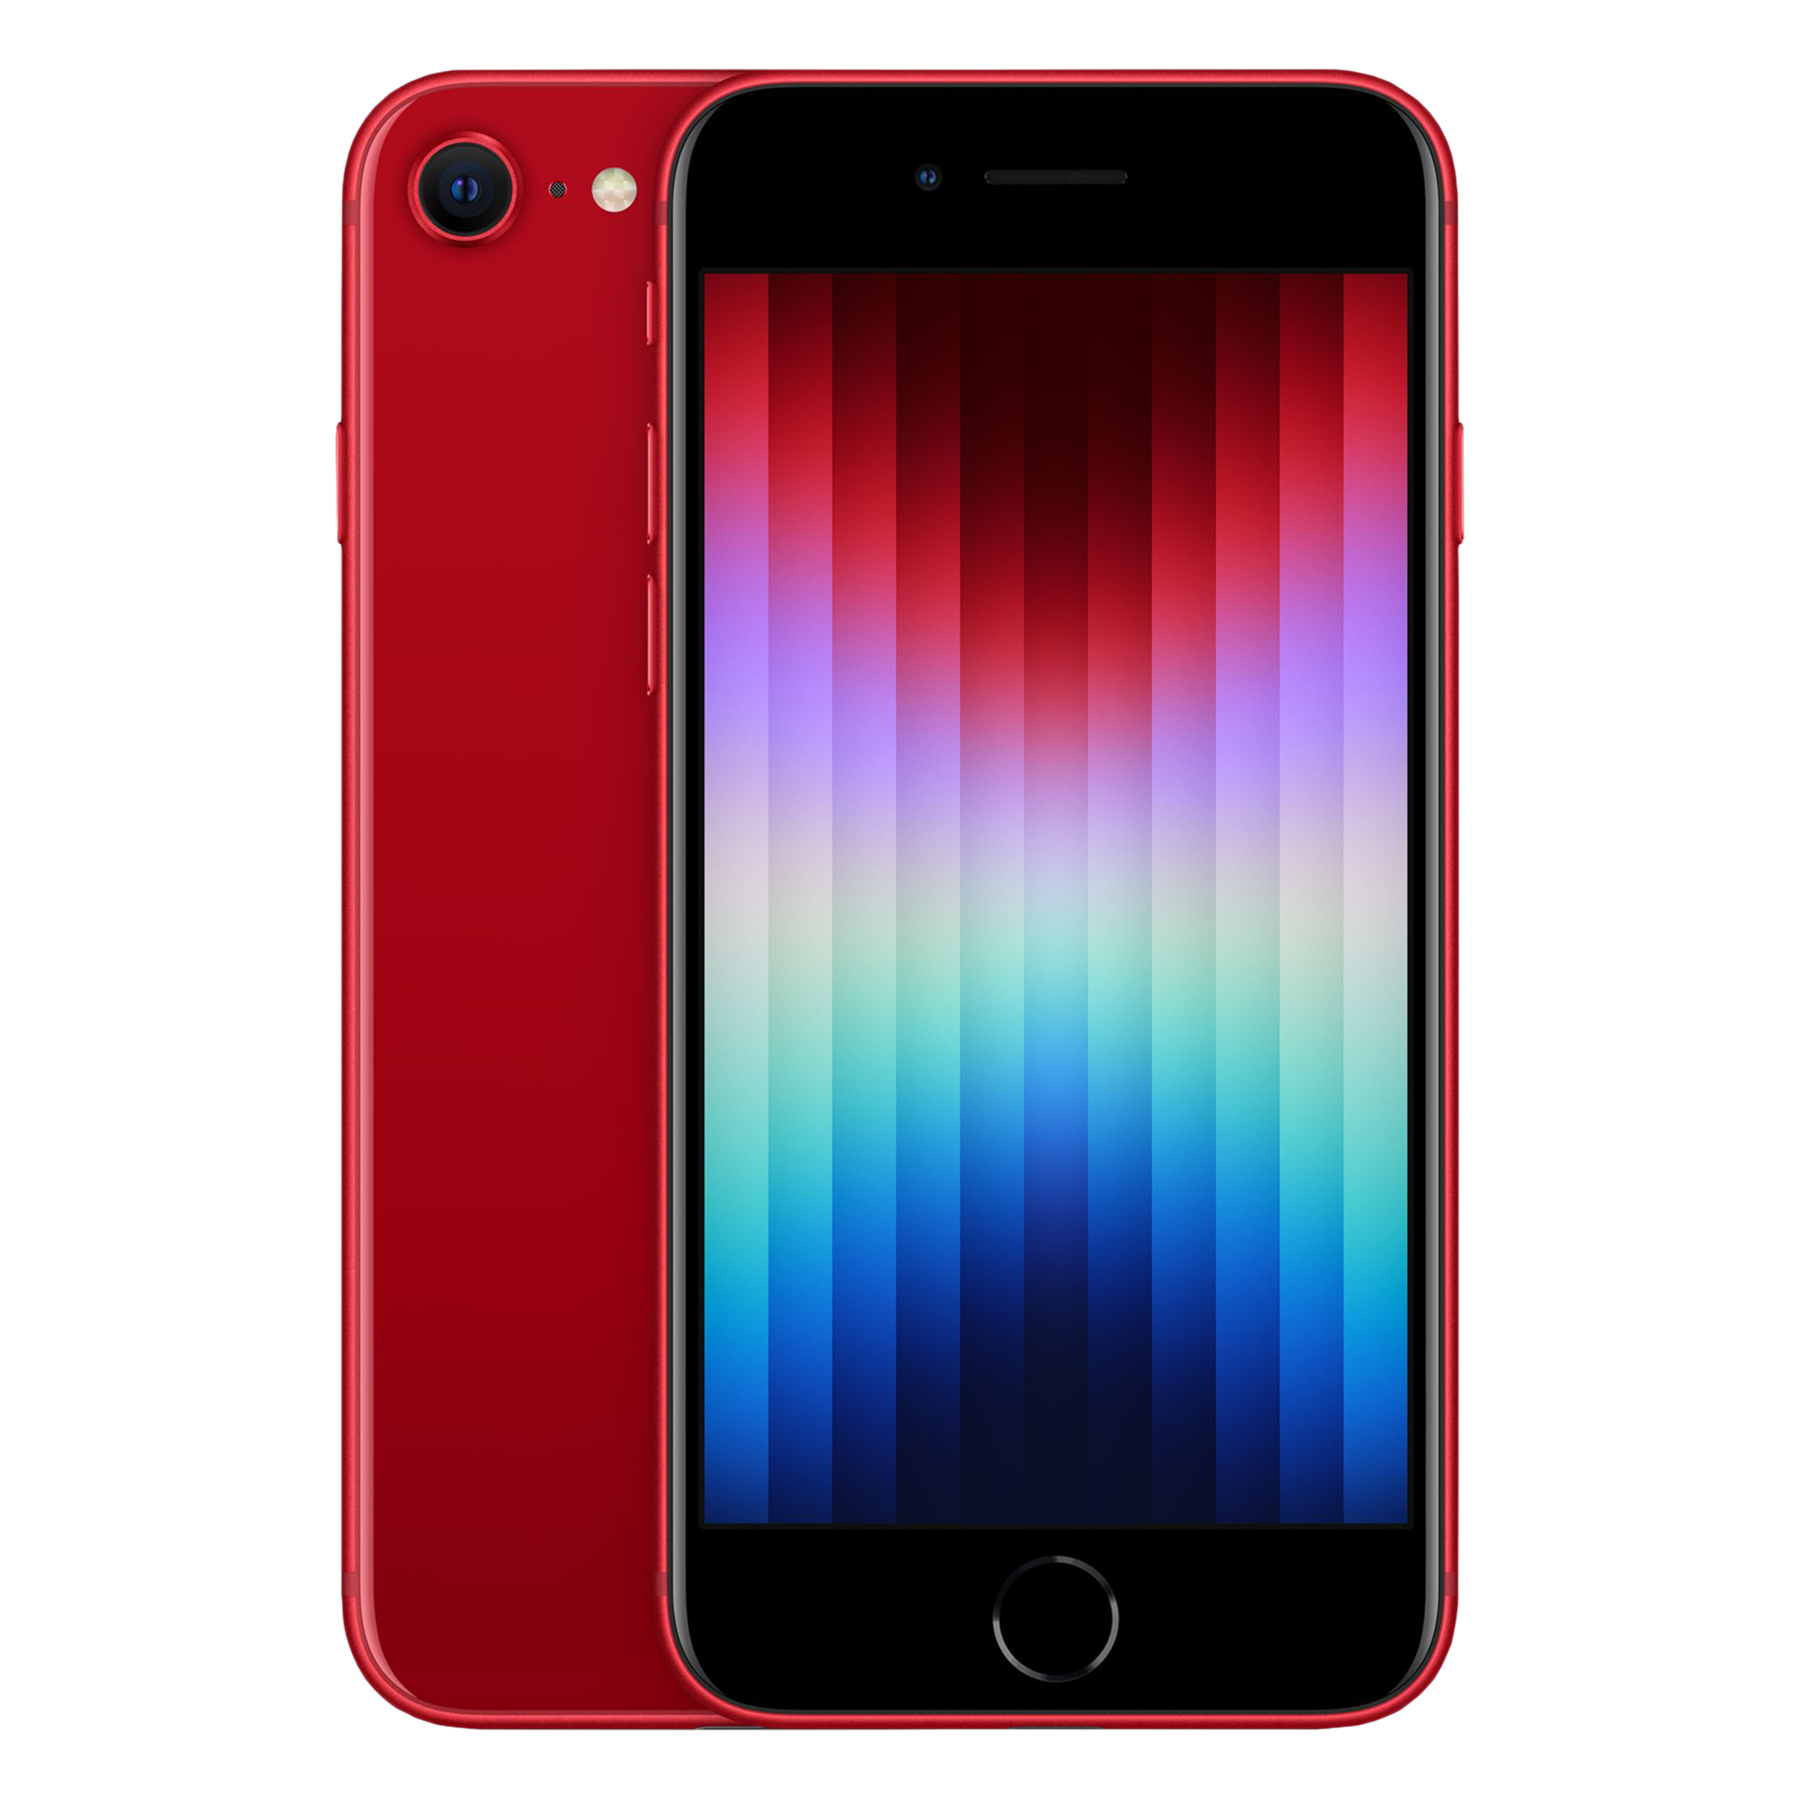 Apple iPhone SE 3rd Gen (128GB, Red)